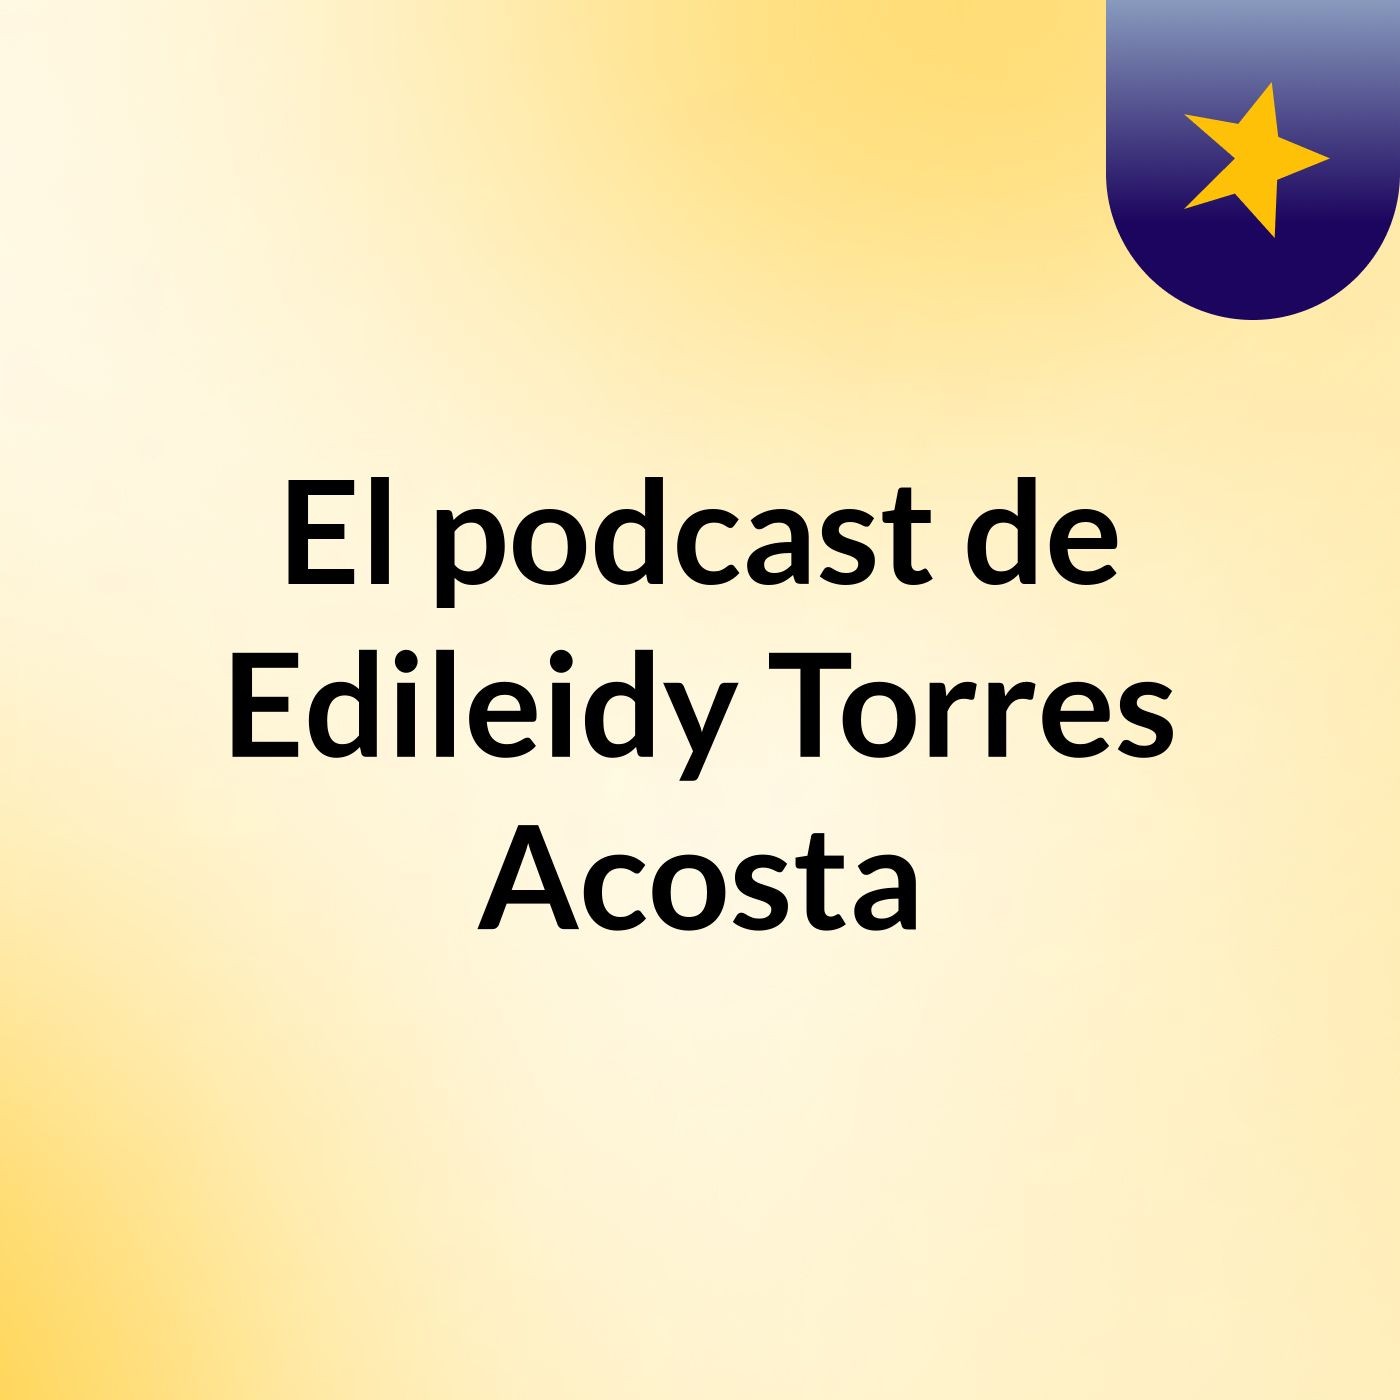 Episodio 1 - El podcast de Edileidy Torres Acosta